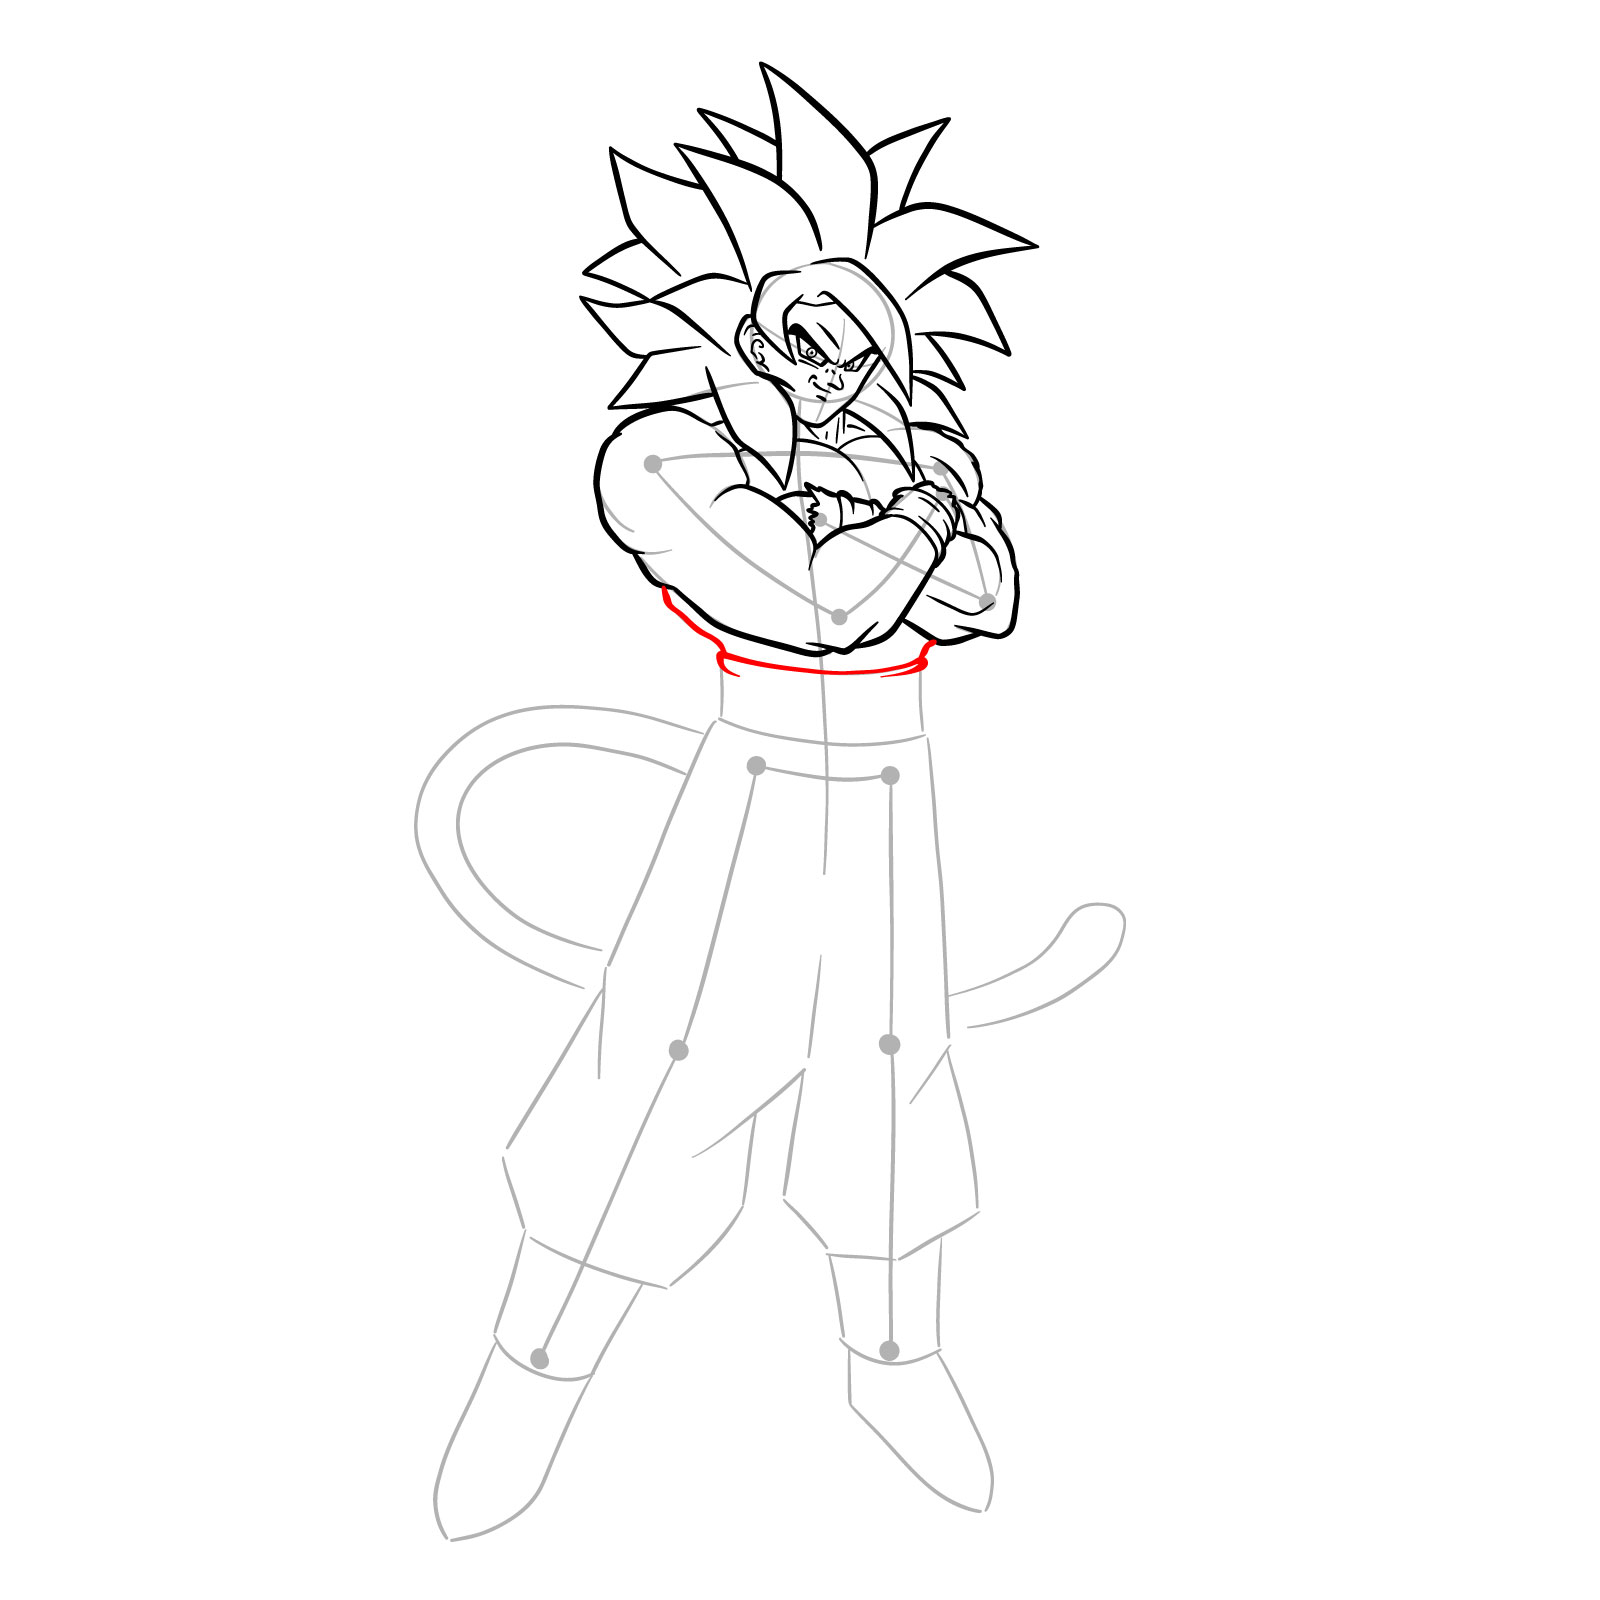 How to tát draw Goku Super Saiyan 4 - step 21